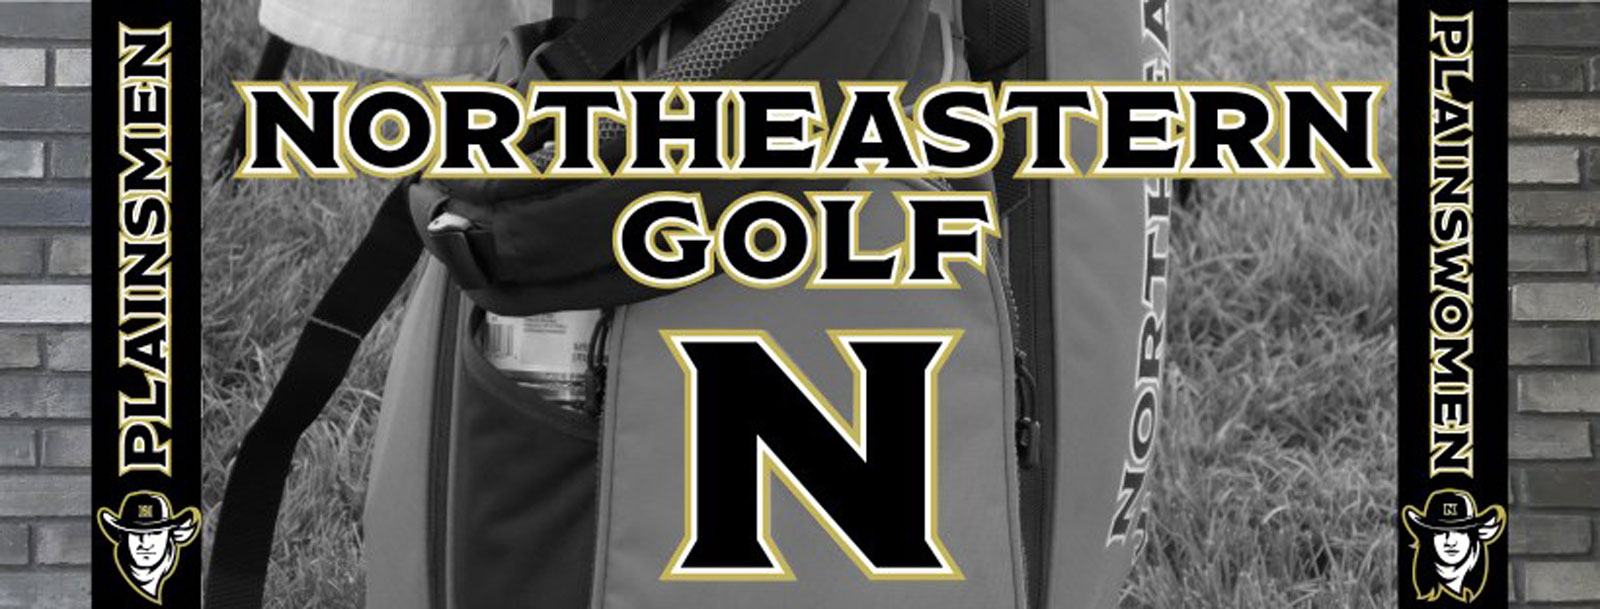 news-northeastern-golf